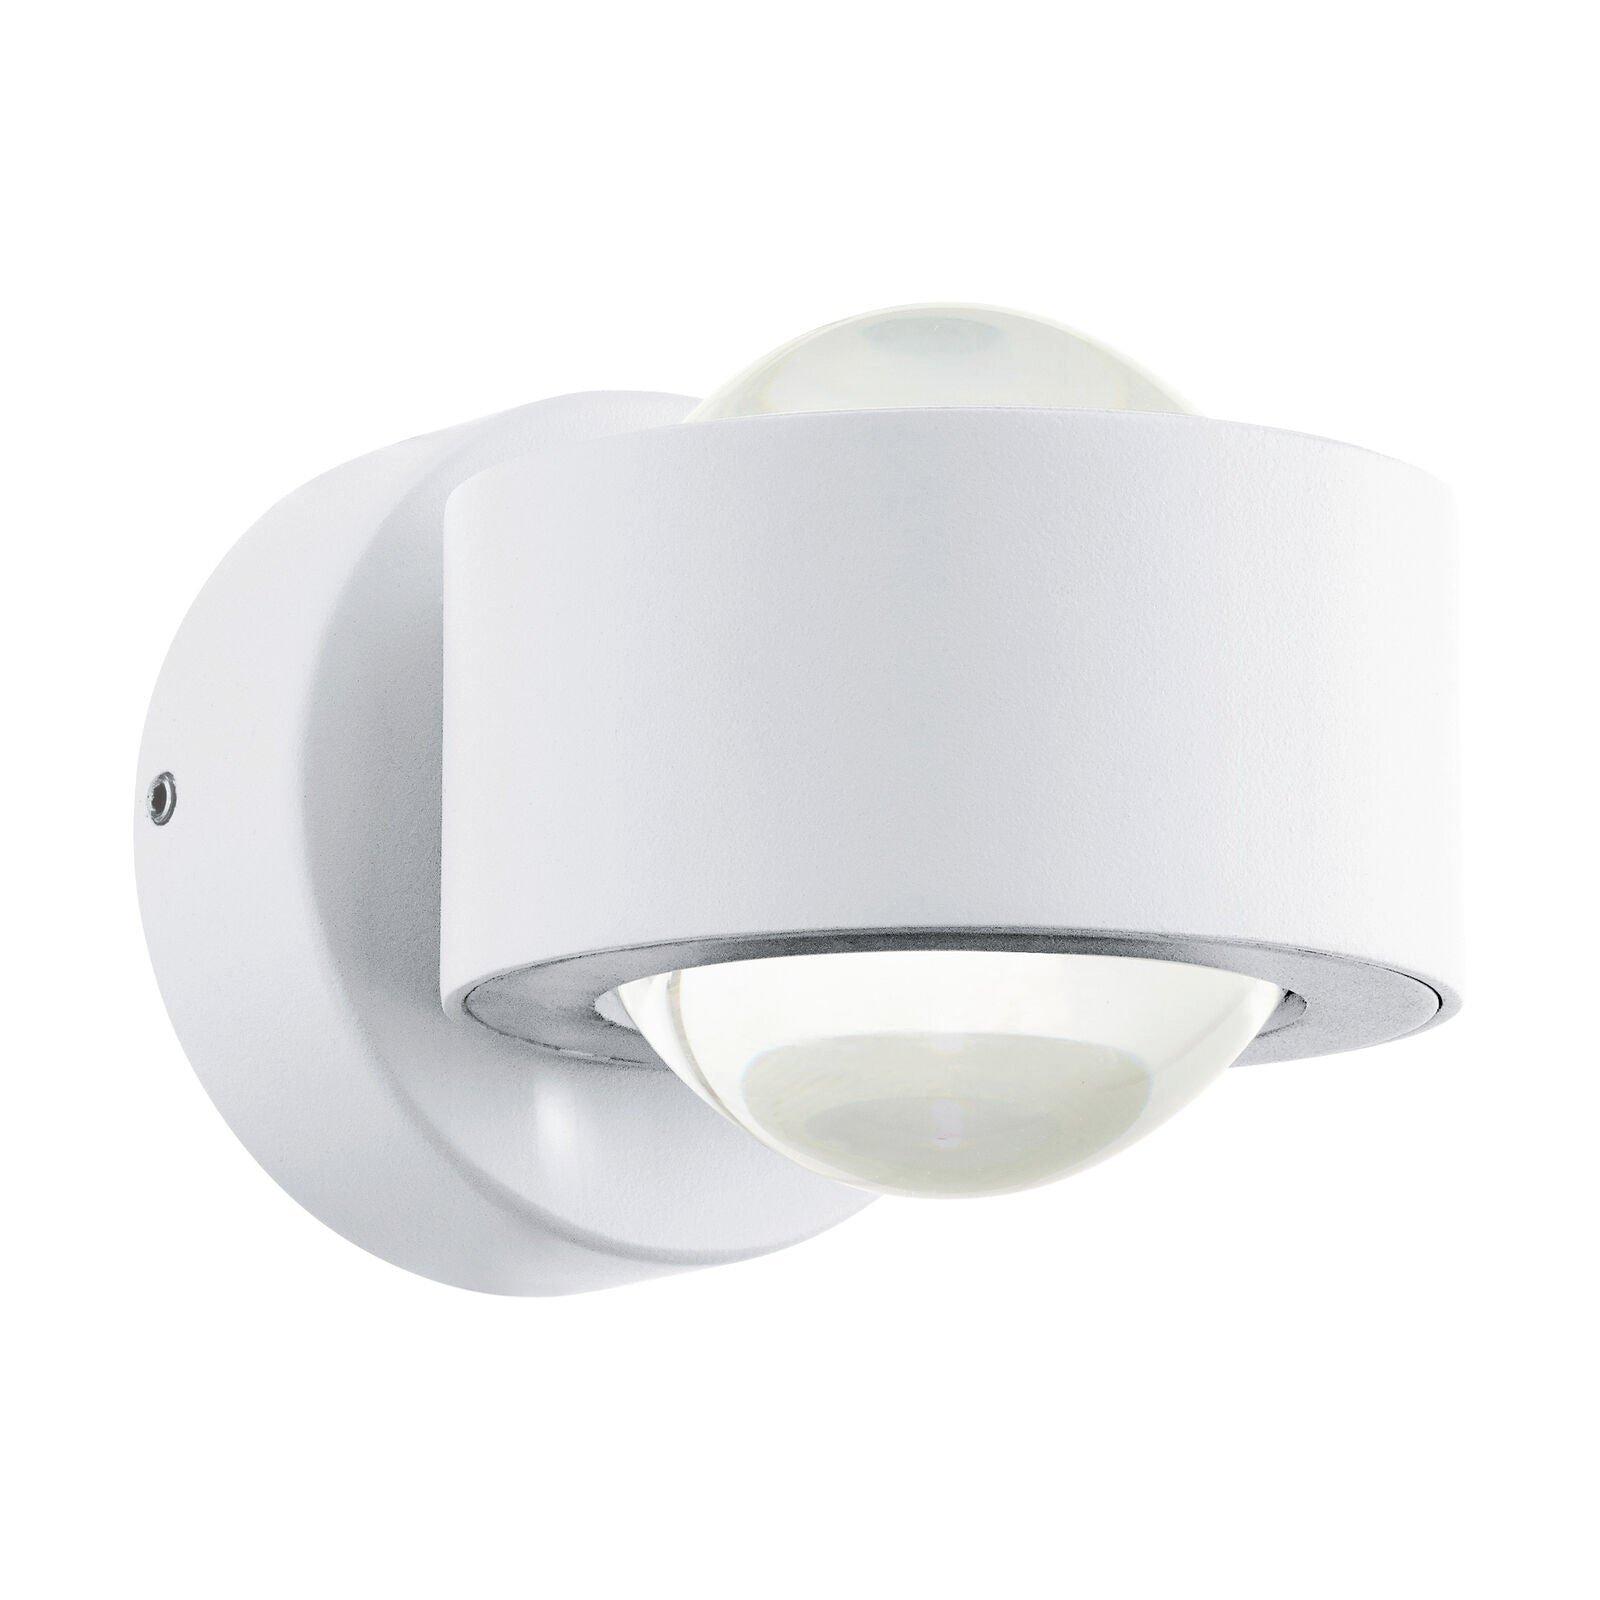 Wall Light Colour White Aluminium Shade Clear Plastic Bulb LED 2x2.5W Included